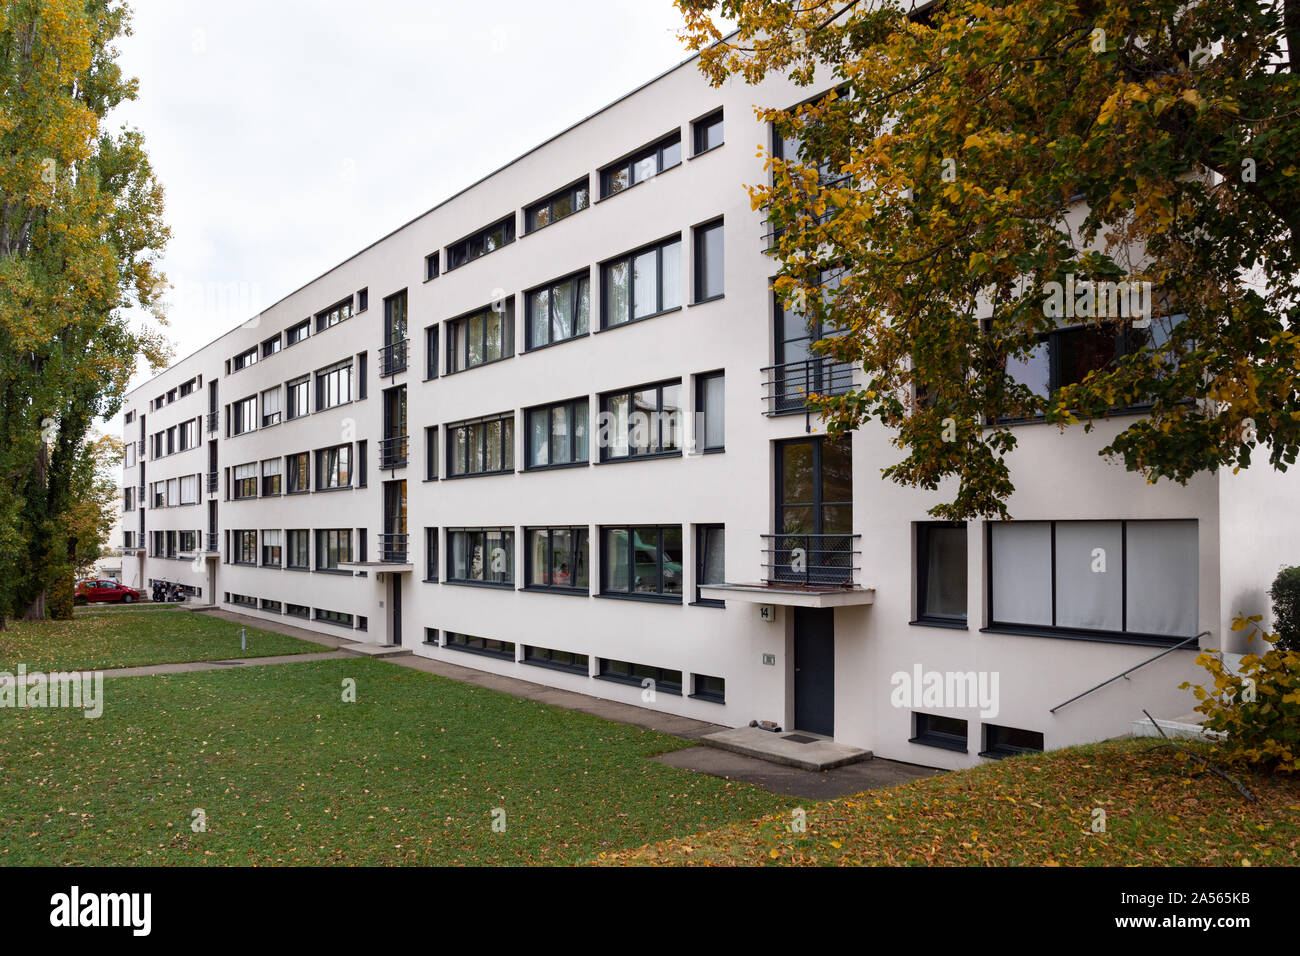 Stuttgart, Alemania, 15 de octubre de 2019: Weissenhof Siedlung a.k.a. Weissenhof Estate Edificio Principal por Mies van der Rohe en Stuttgart, Alemania. Modernista Foto de stock